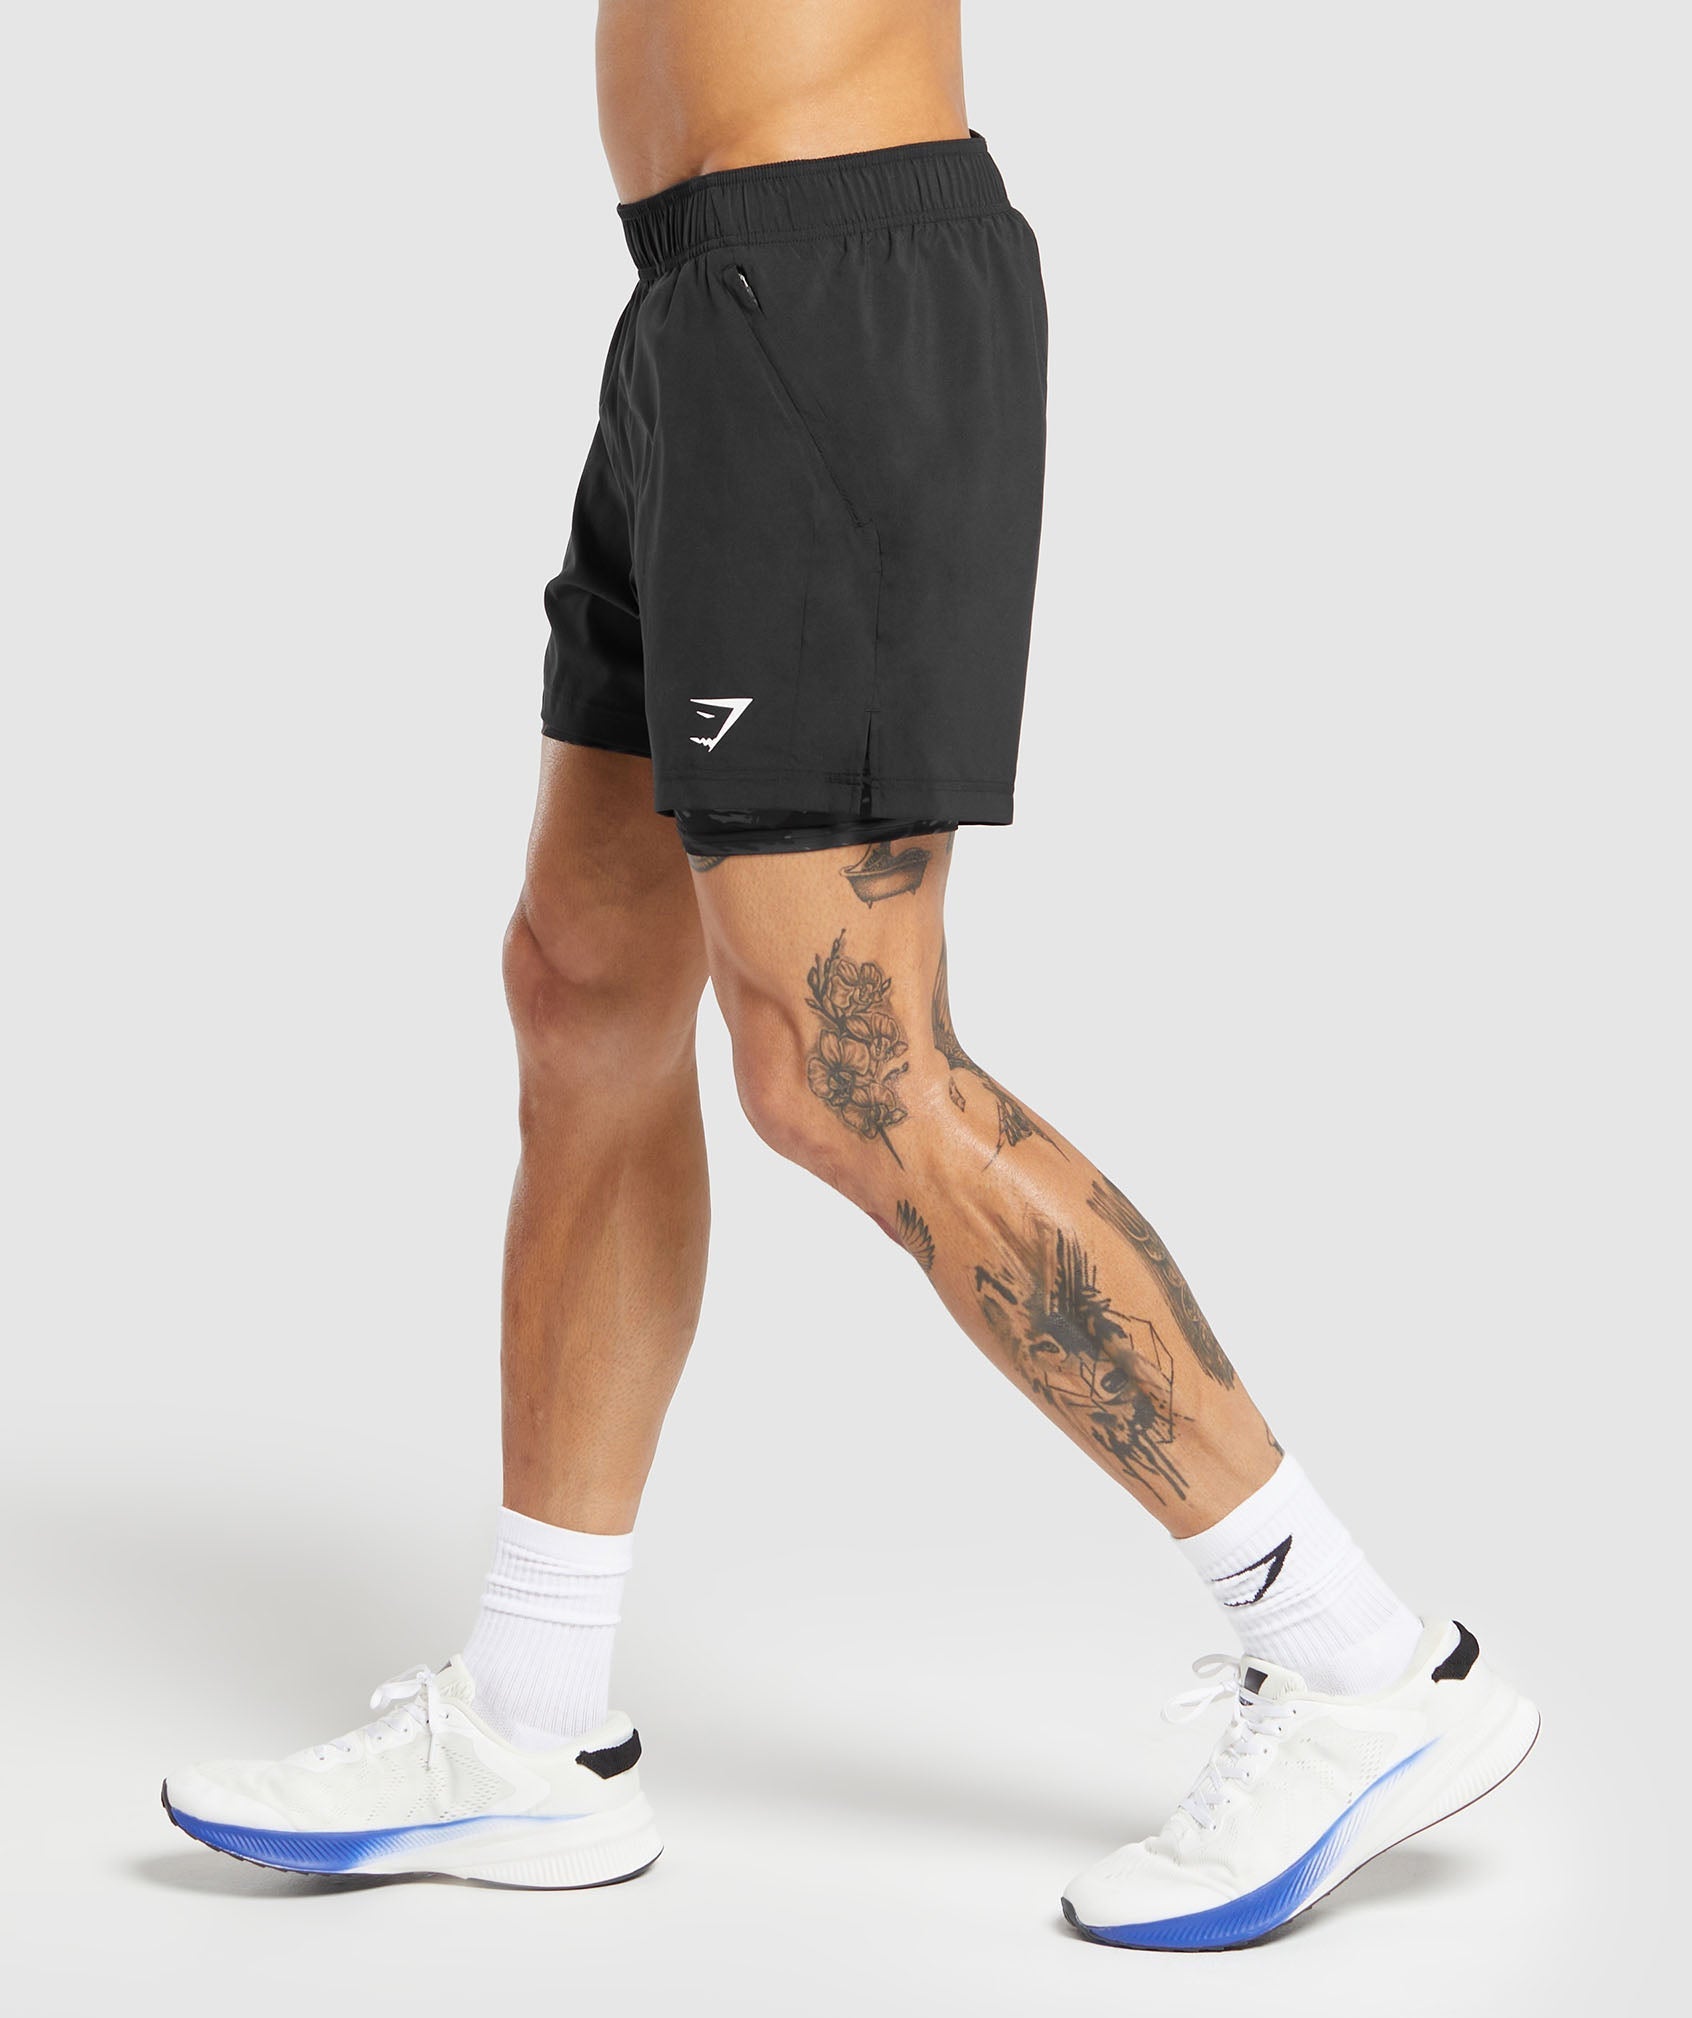 Sport  5" Shorts in Black/Asphalt Grey - view 3